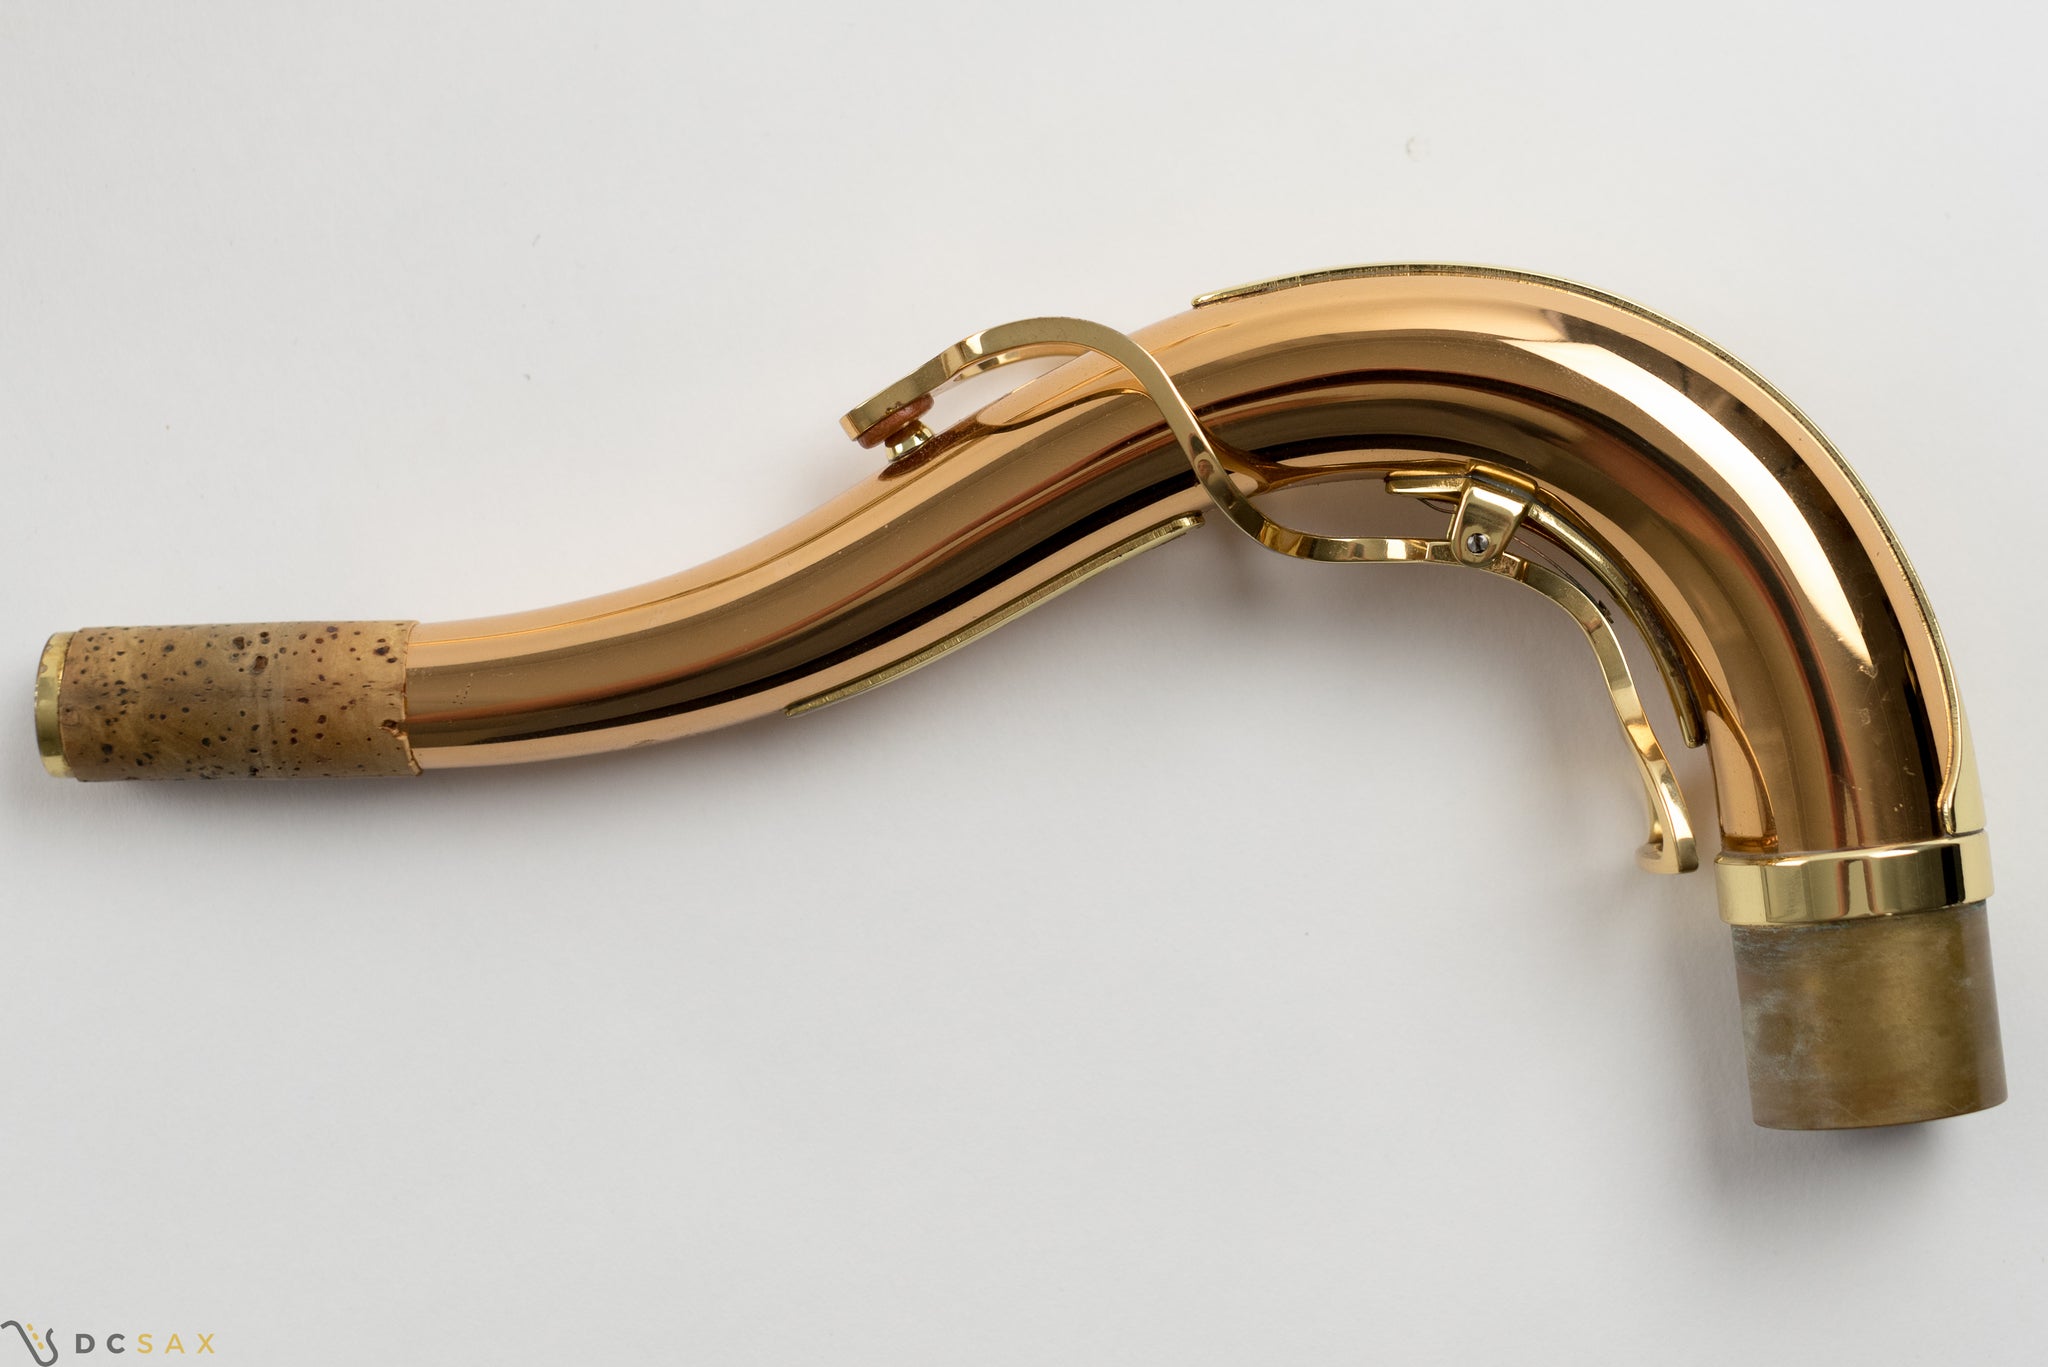 Yanagisawa 992 Tenor Saxophone With Bronze Finish, Near Mint